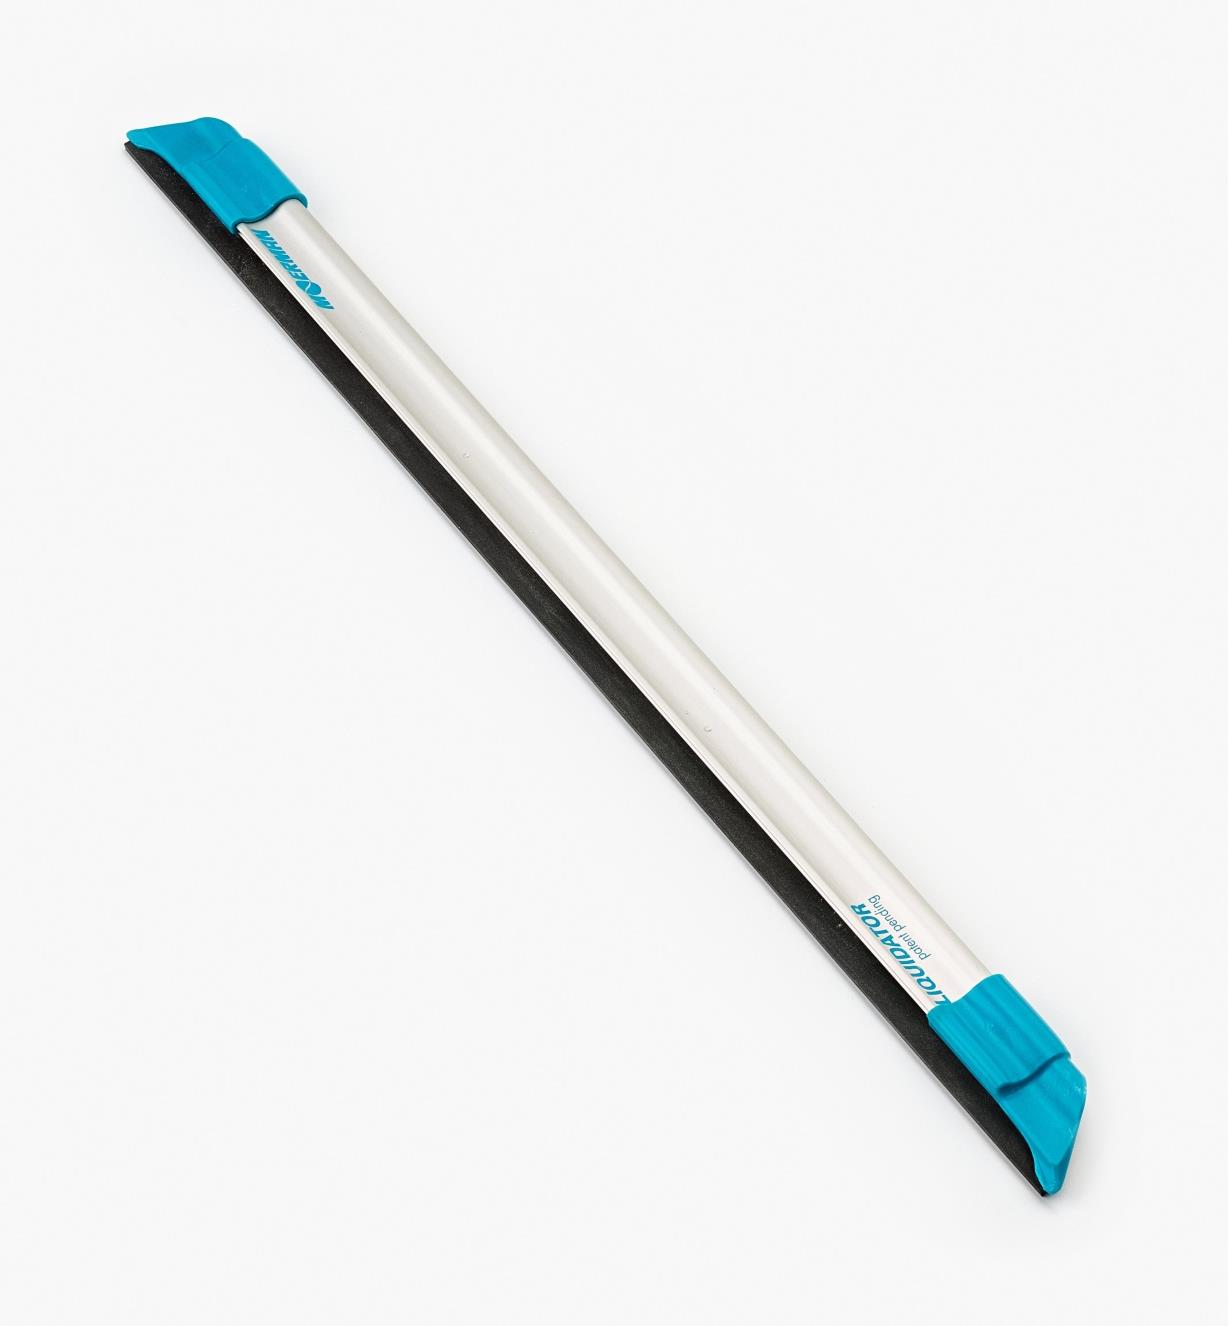 SA091 - Repl. Squeegee Blade for Moerman Window-Washing Tool